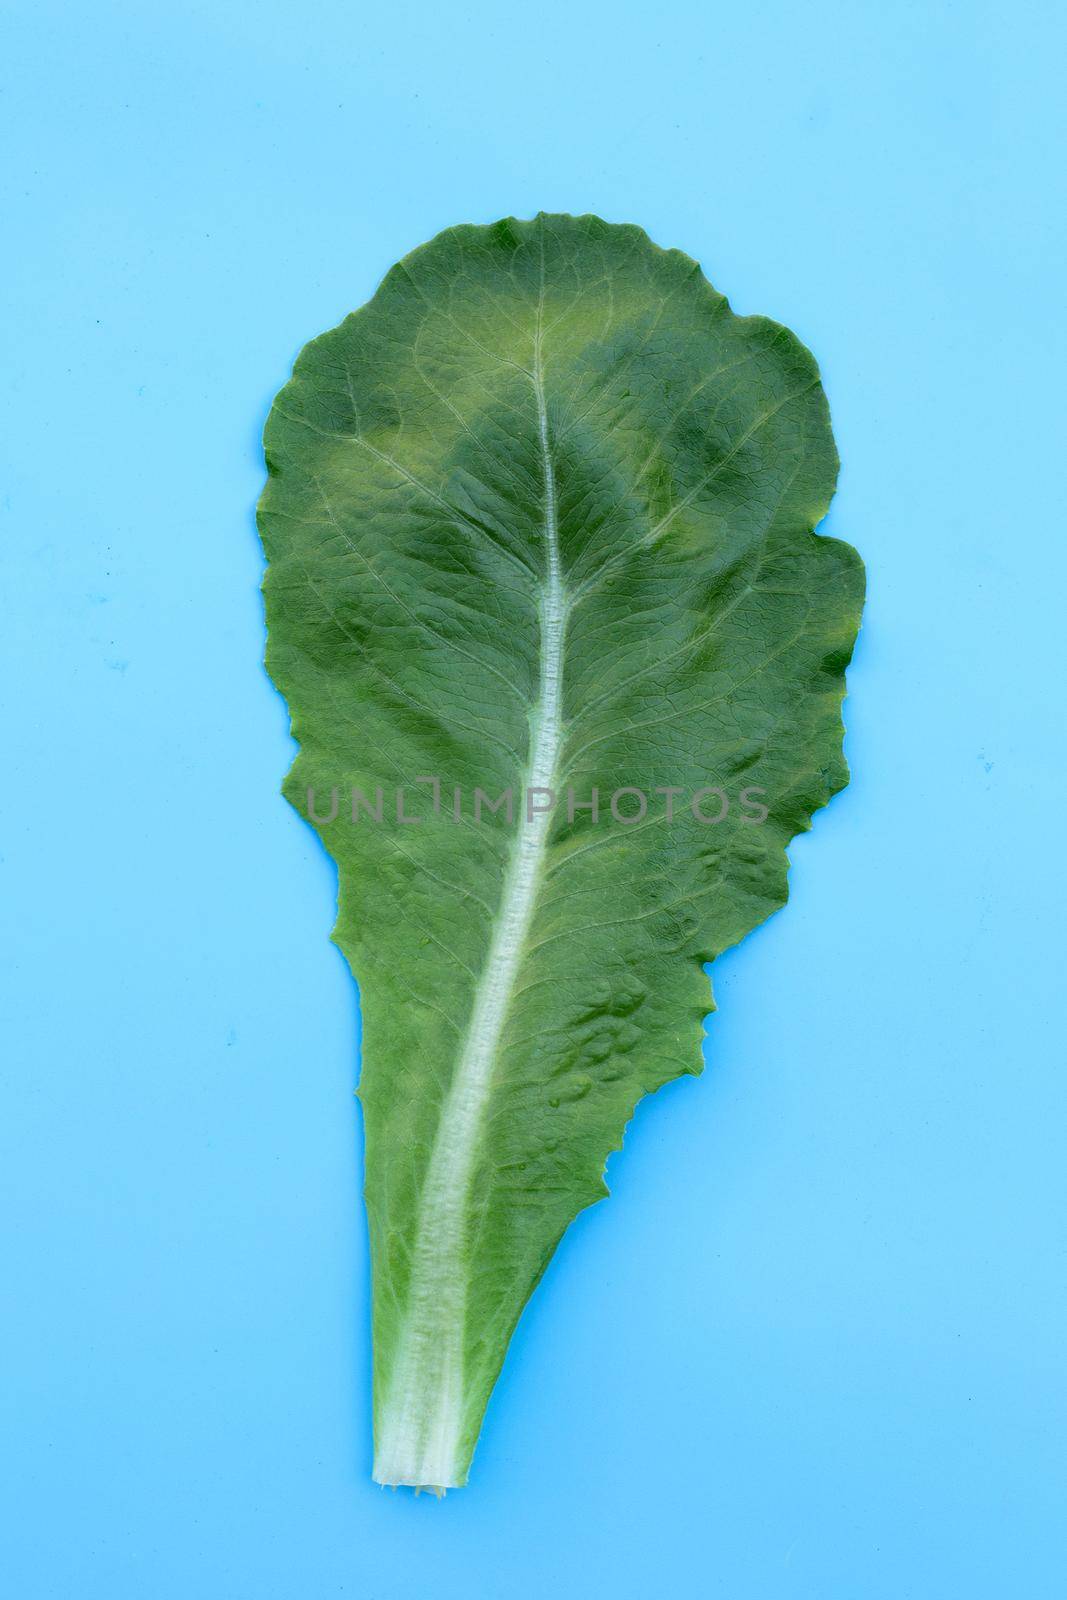 Lettuce leaf on blue background. Top view